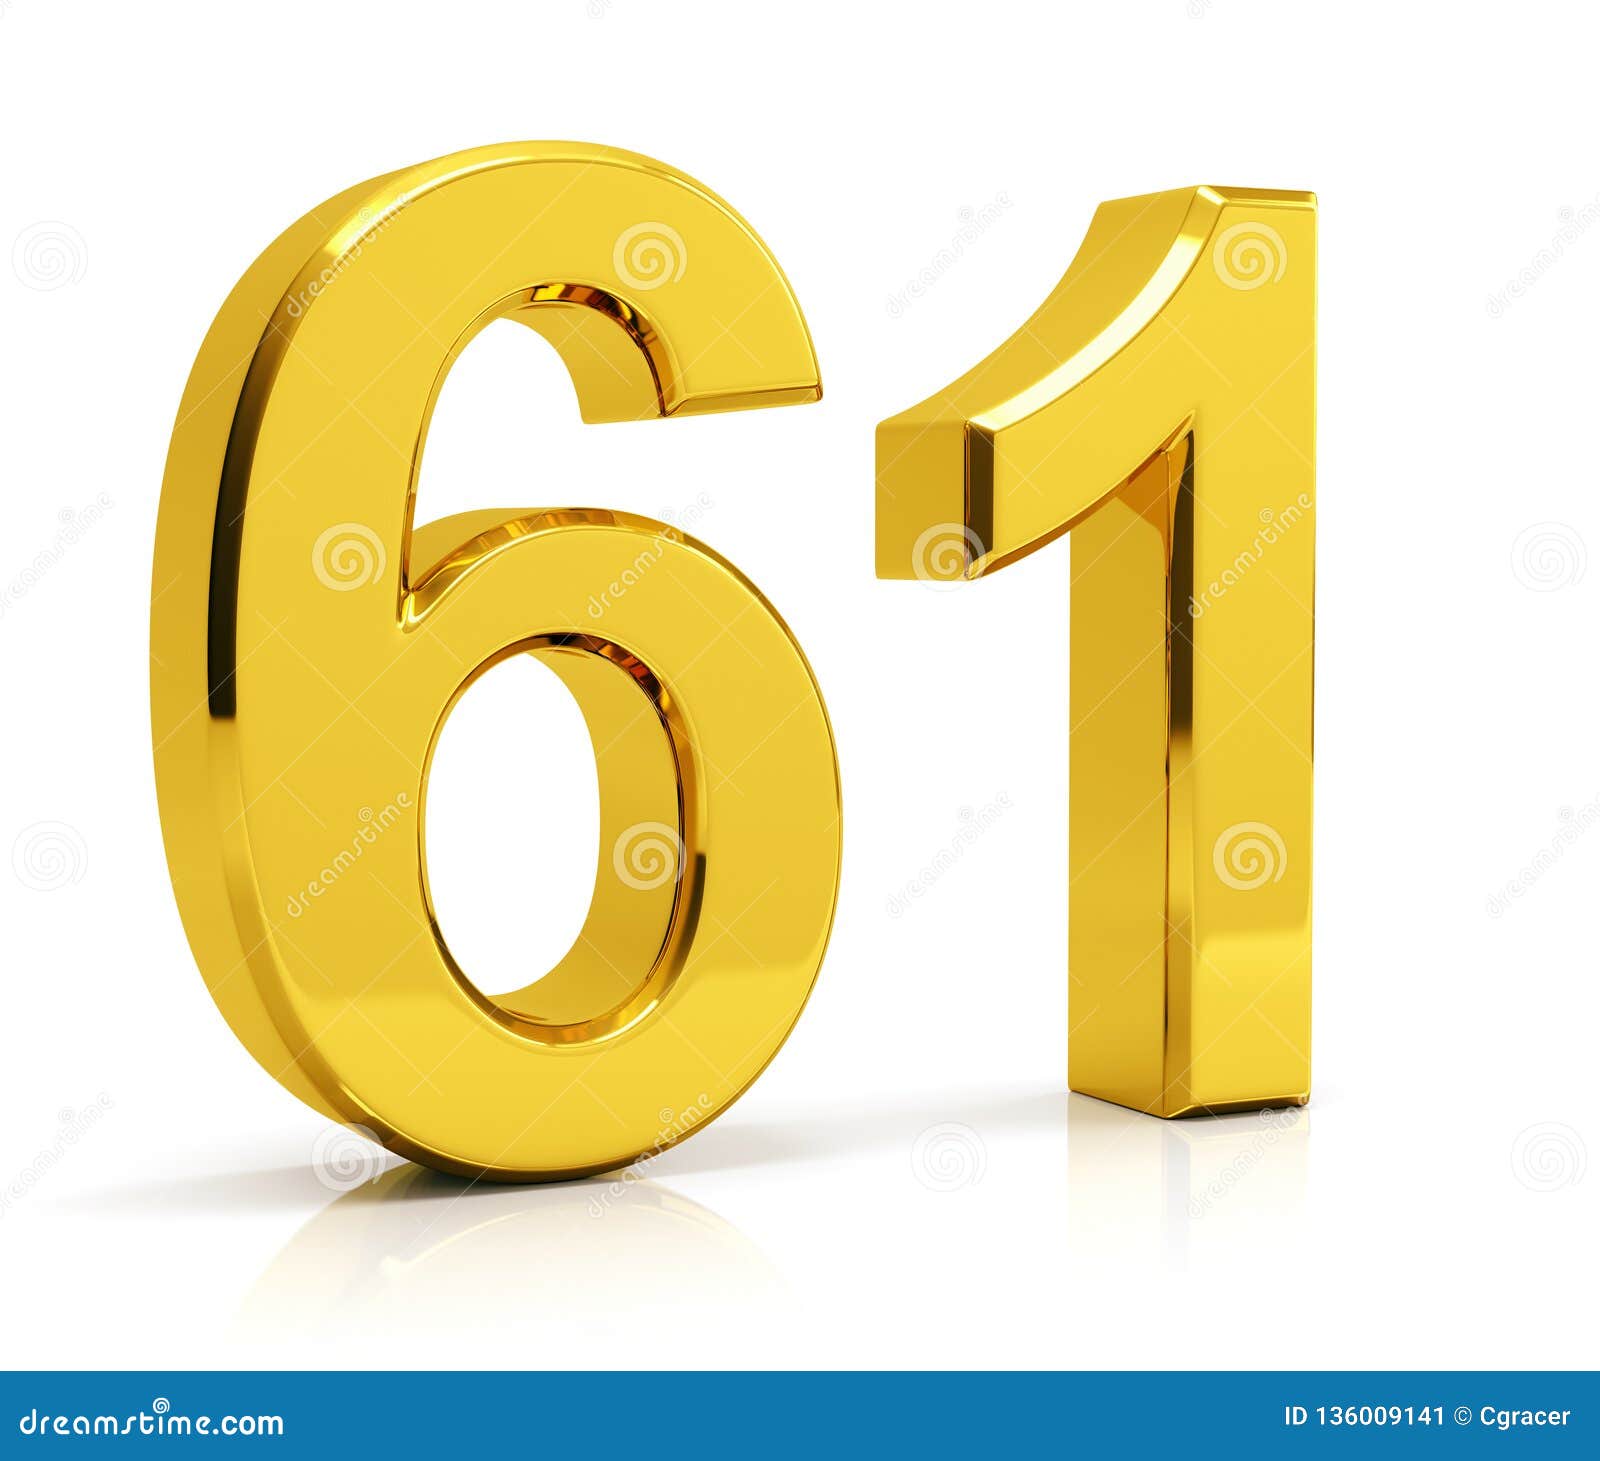 number-61-stock-illustration-illustration-of-golden-136009141